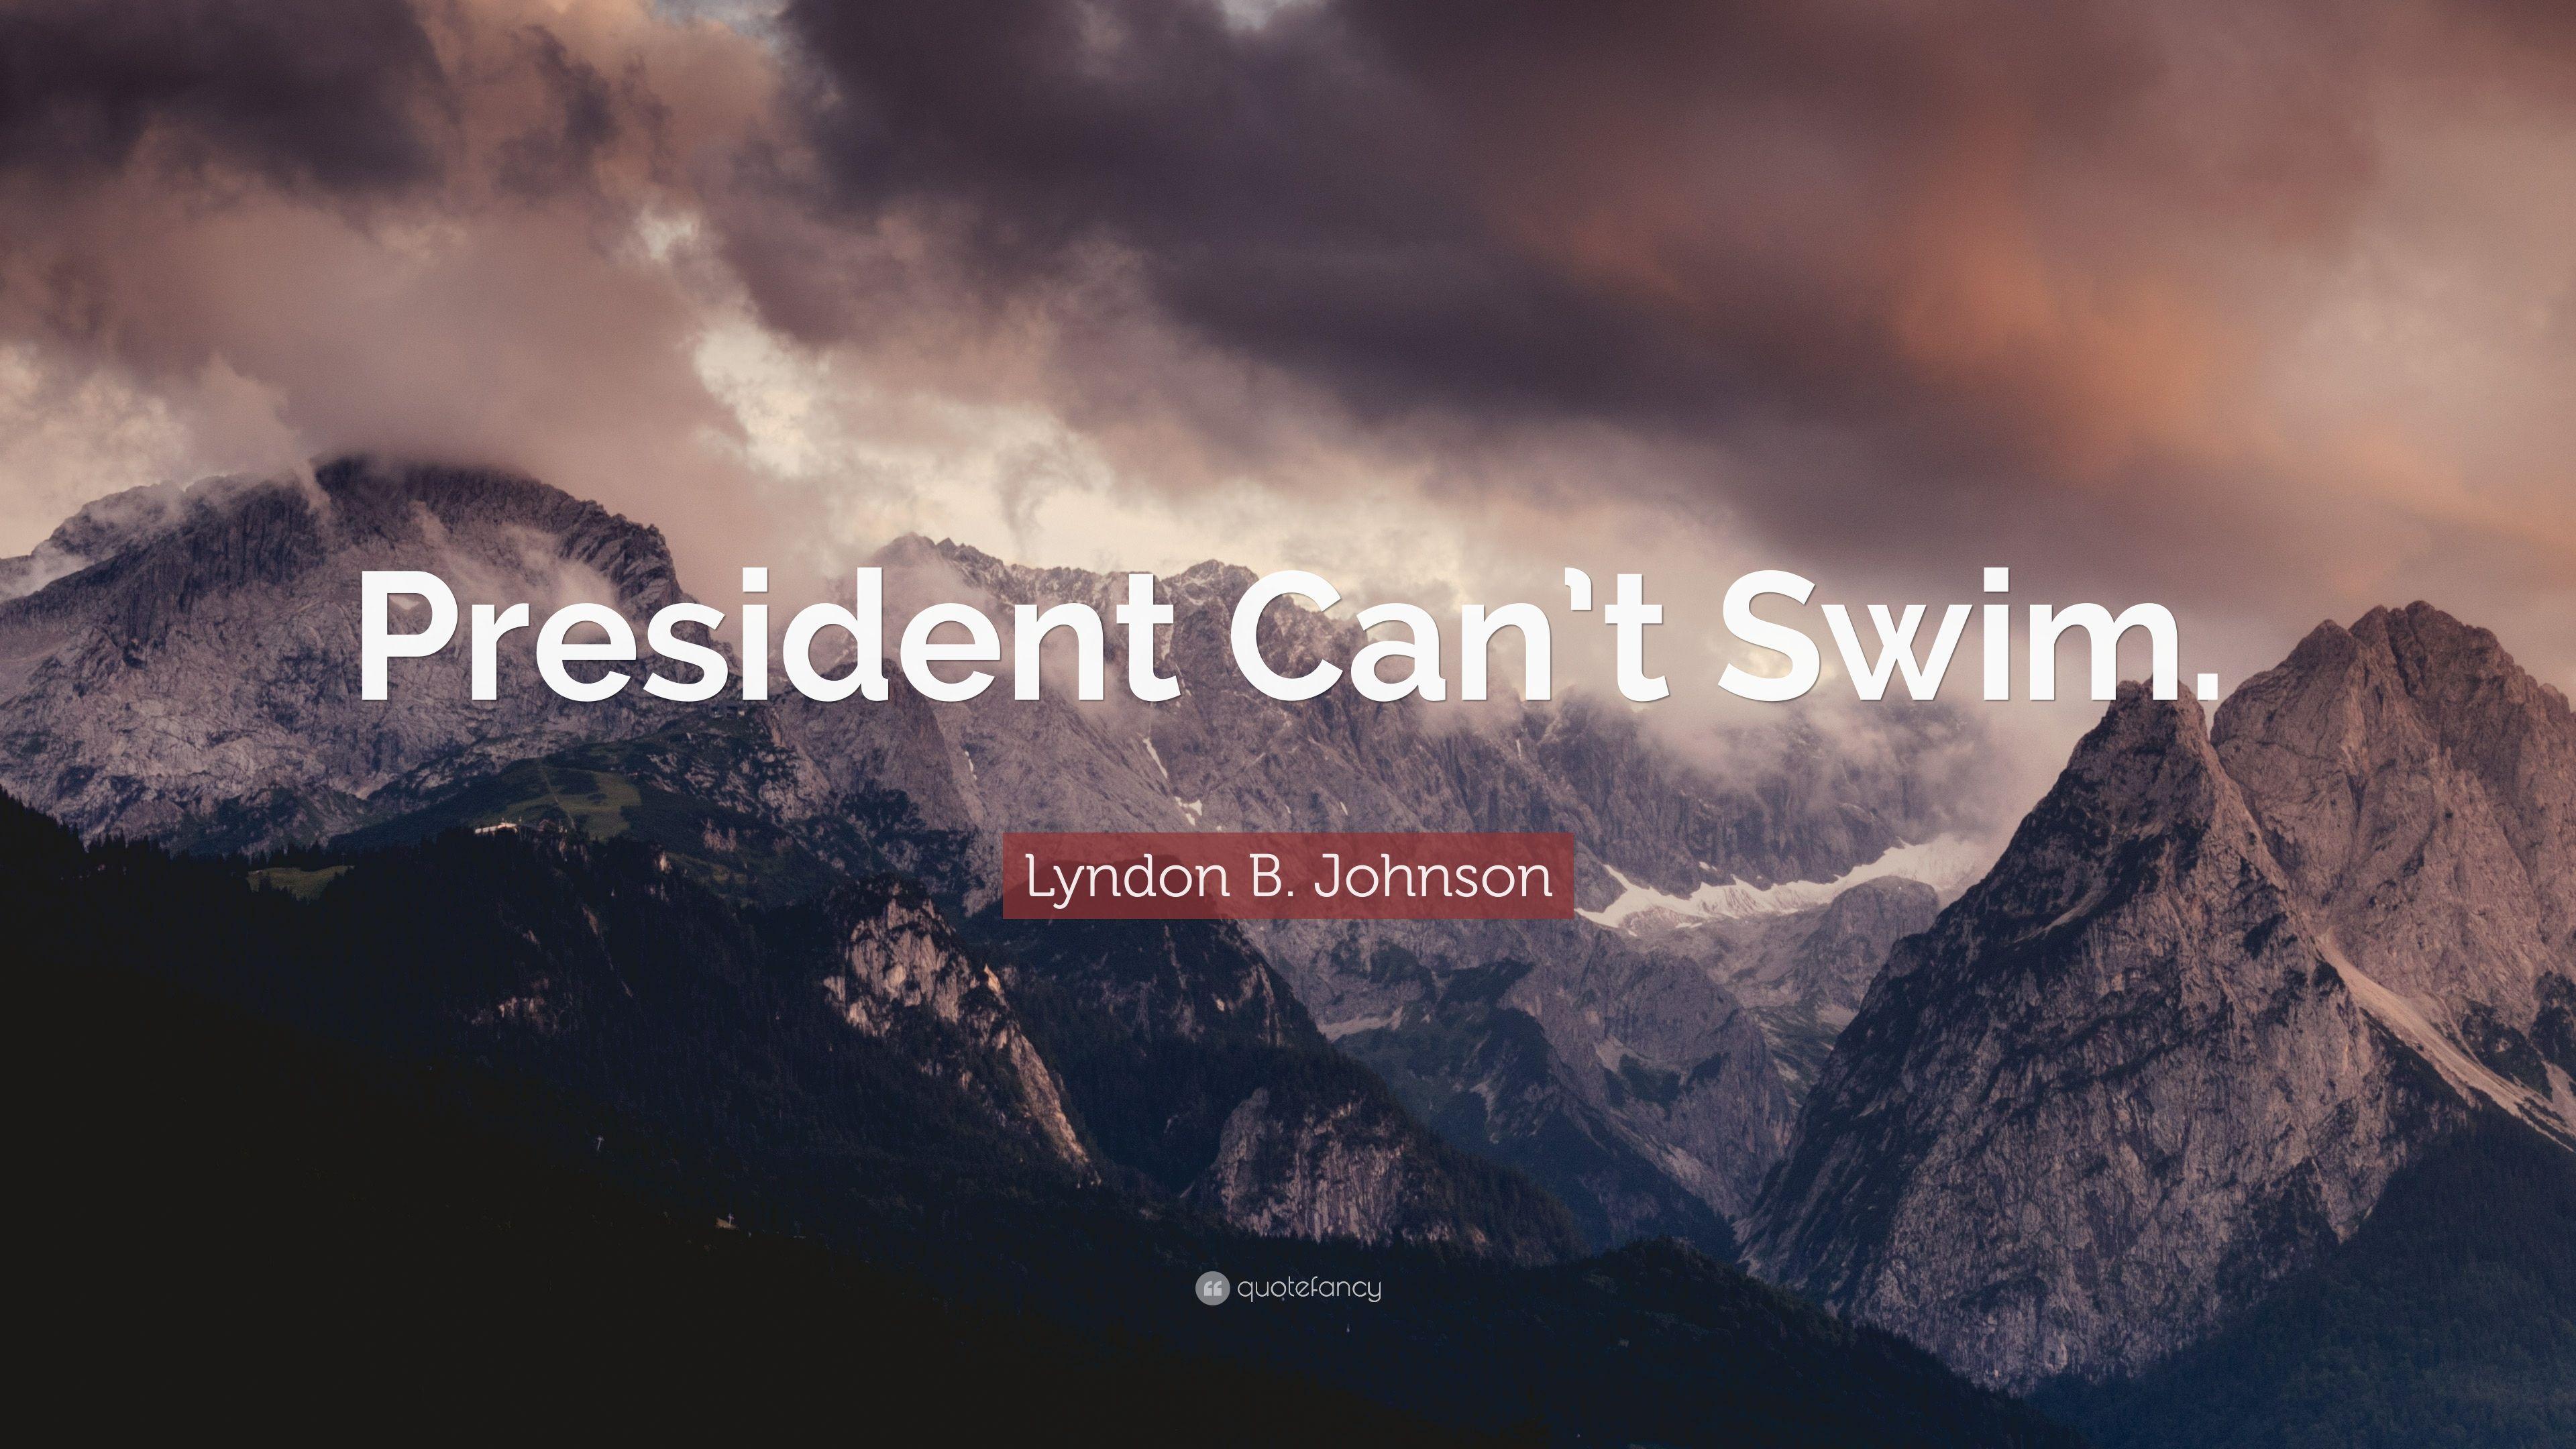 Lyndon B. Johnson Quote: “President Can't Swim.” 7 wallpaper